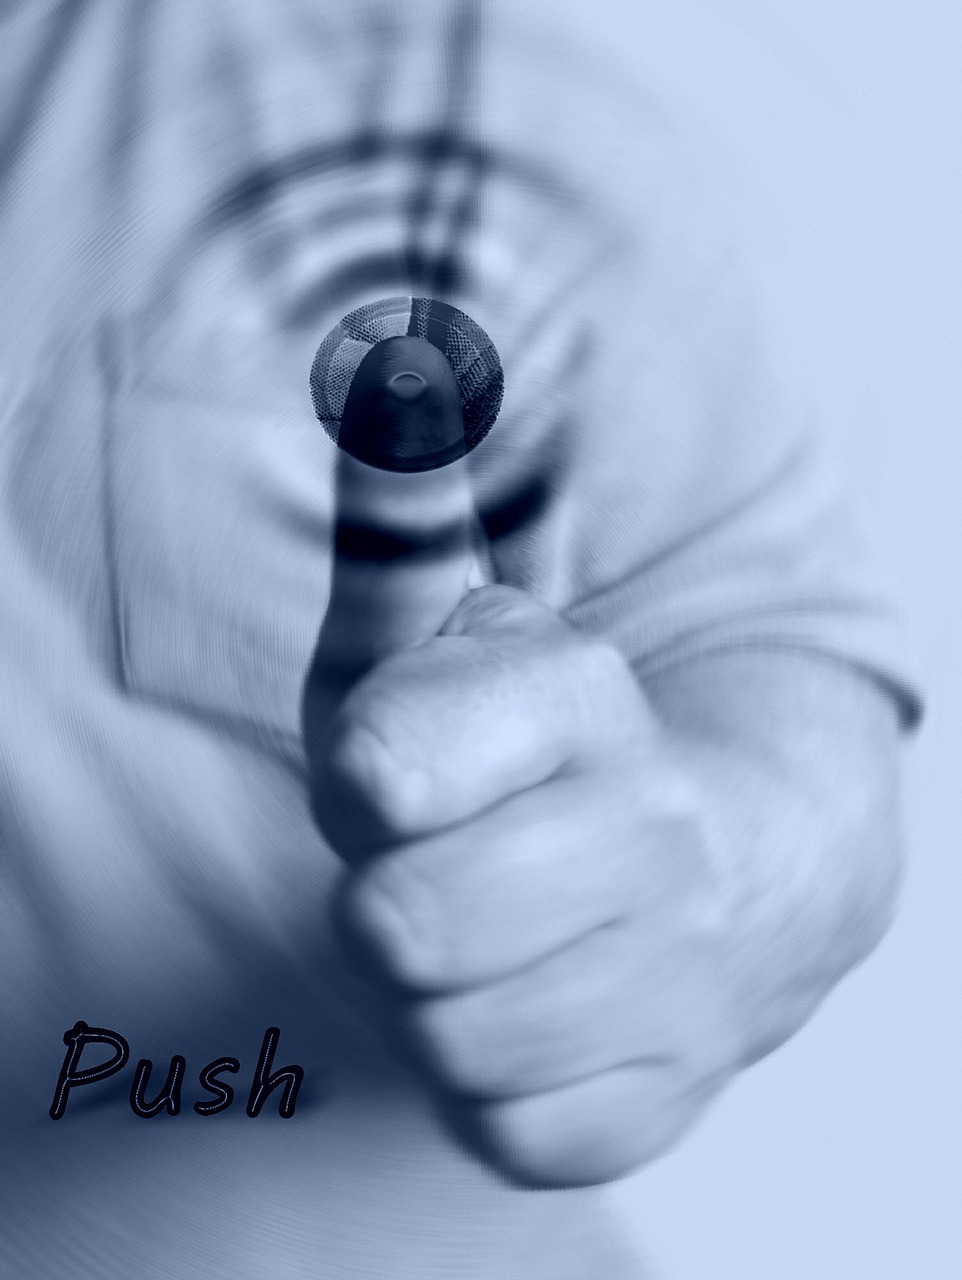 turn on push press free photo